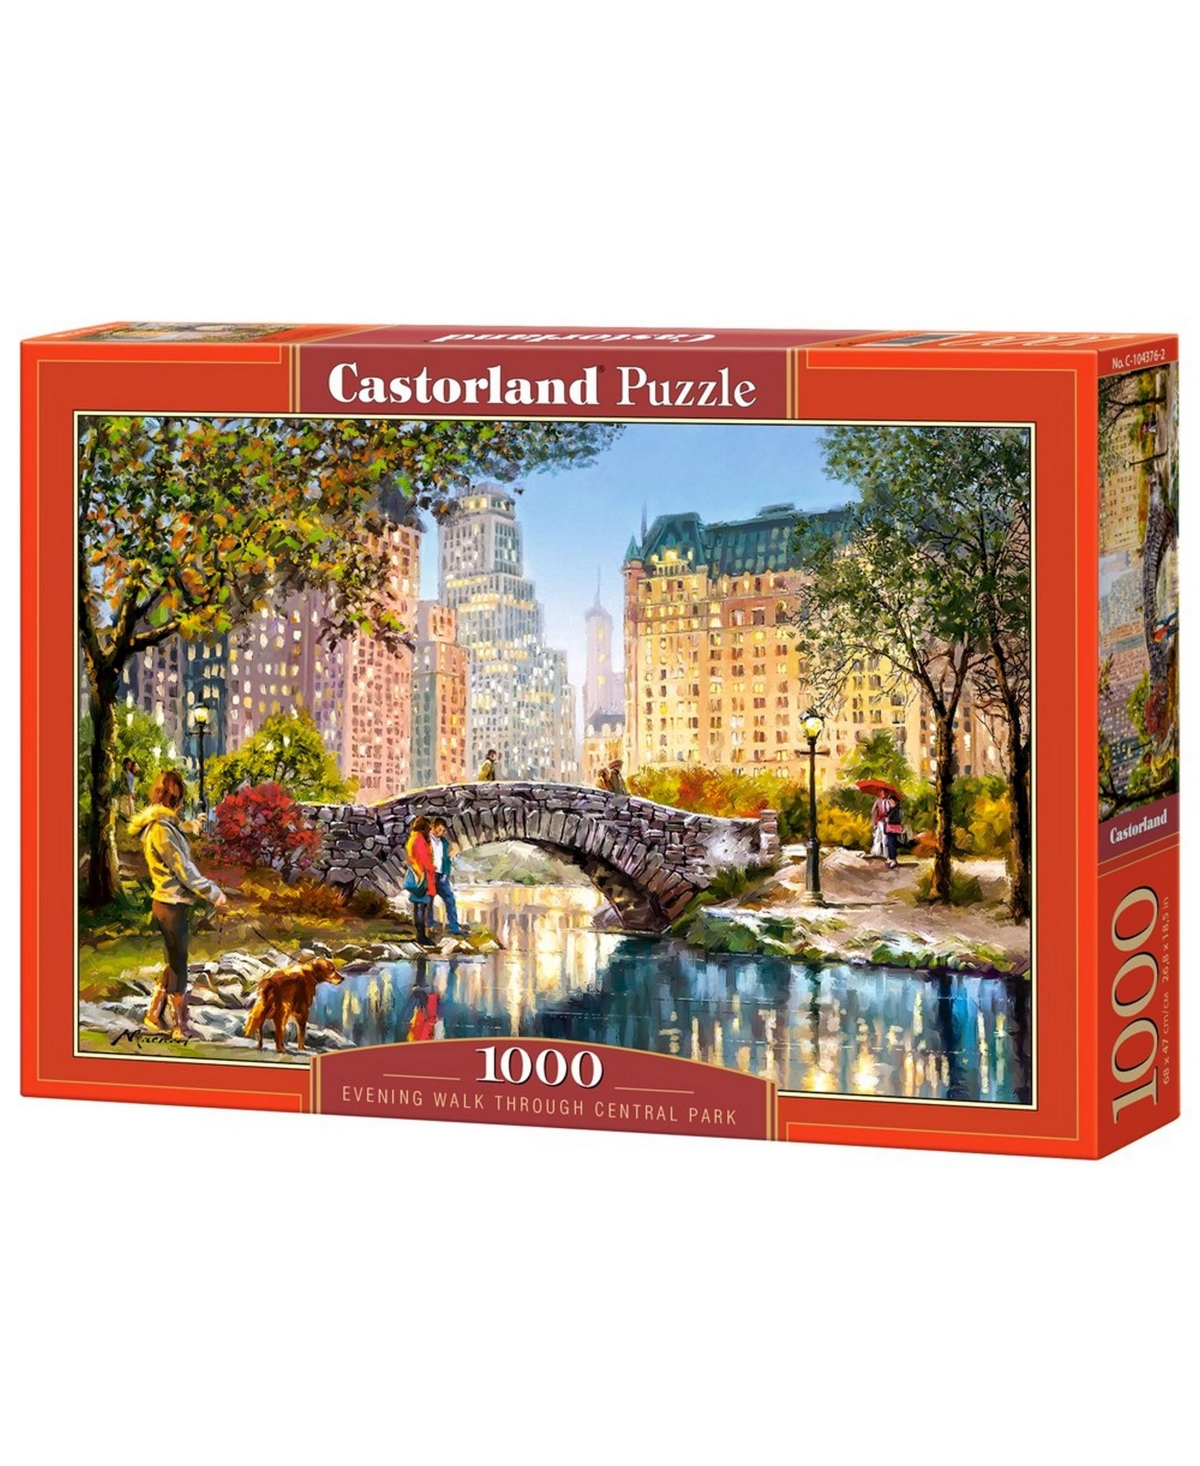 Castorland Evening Walk Through Central Park Jigsaw Puzzle Set, 1000 Piece In Multicolor